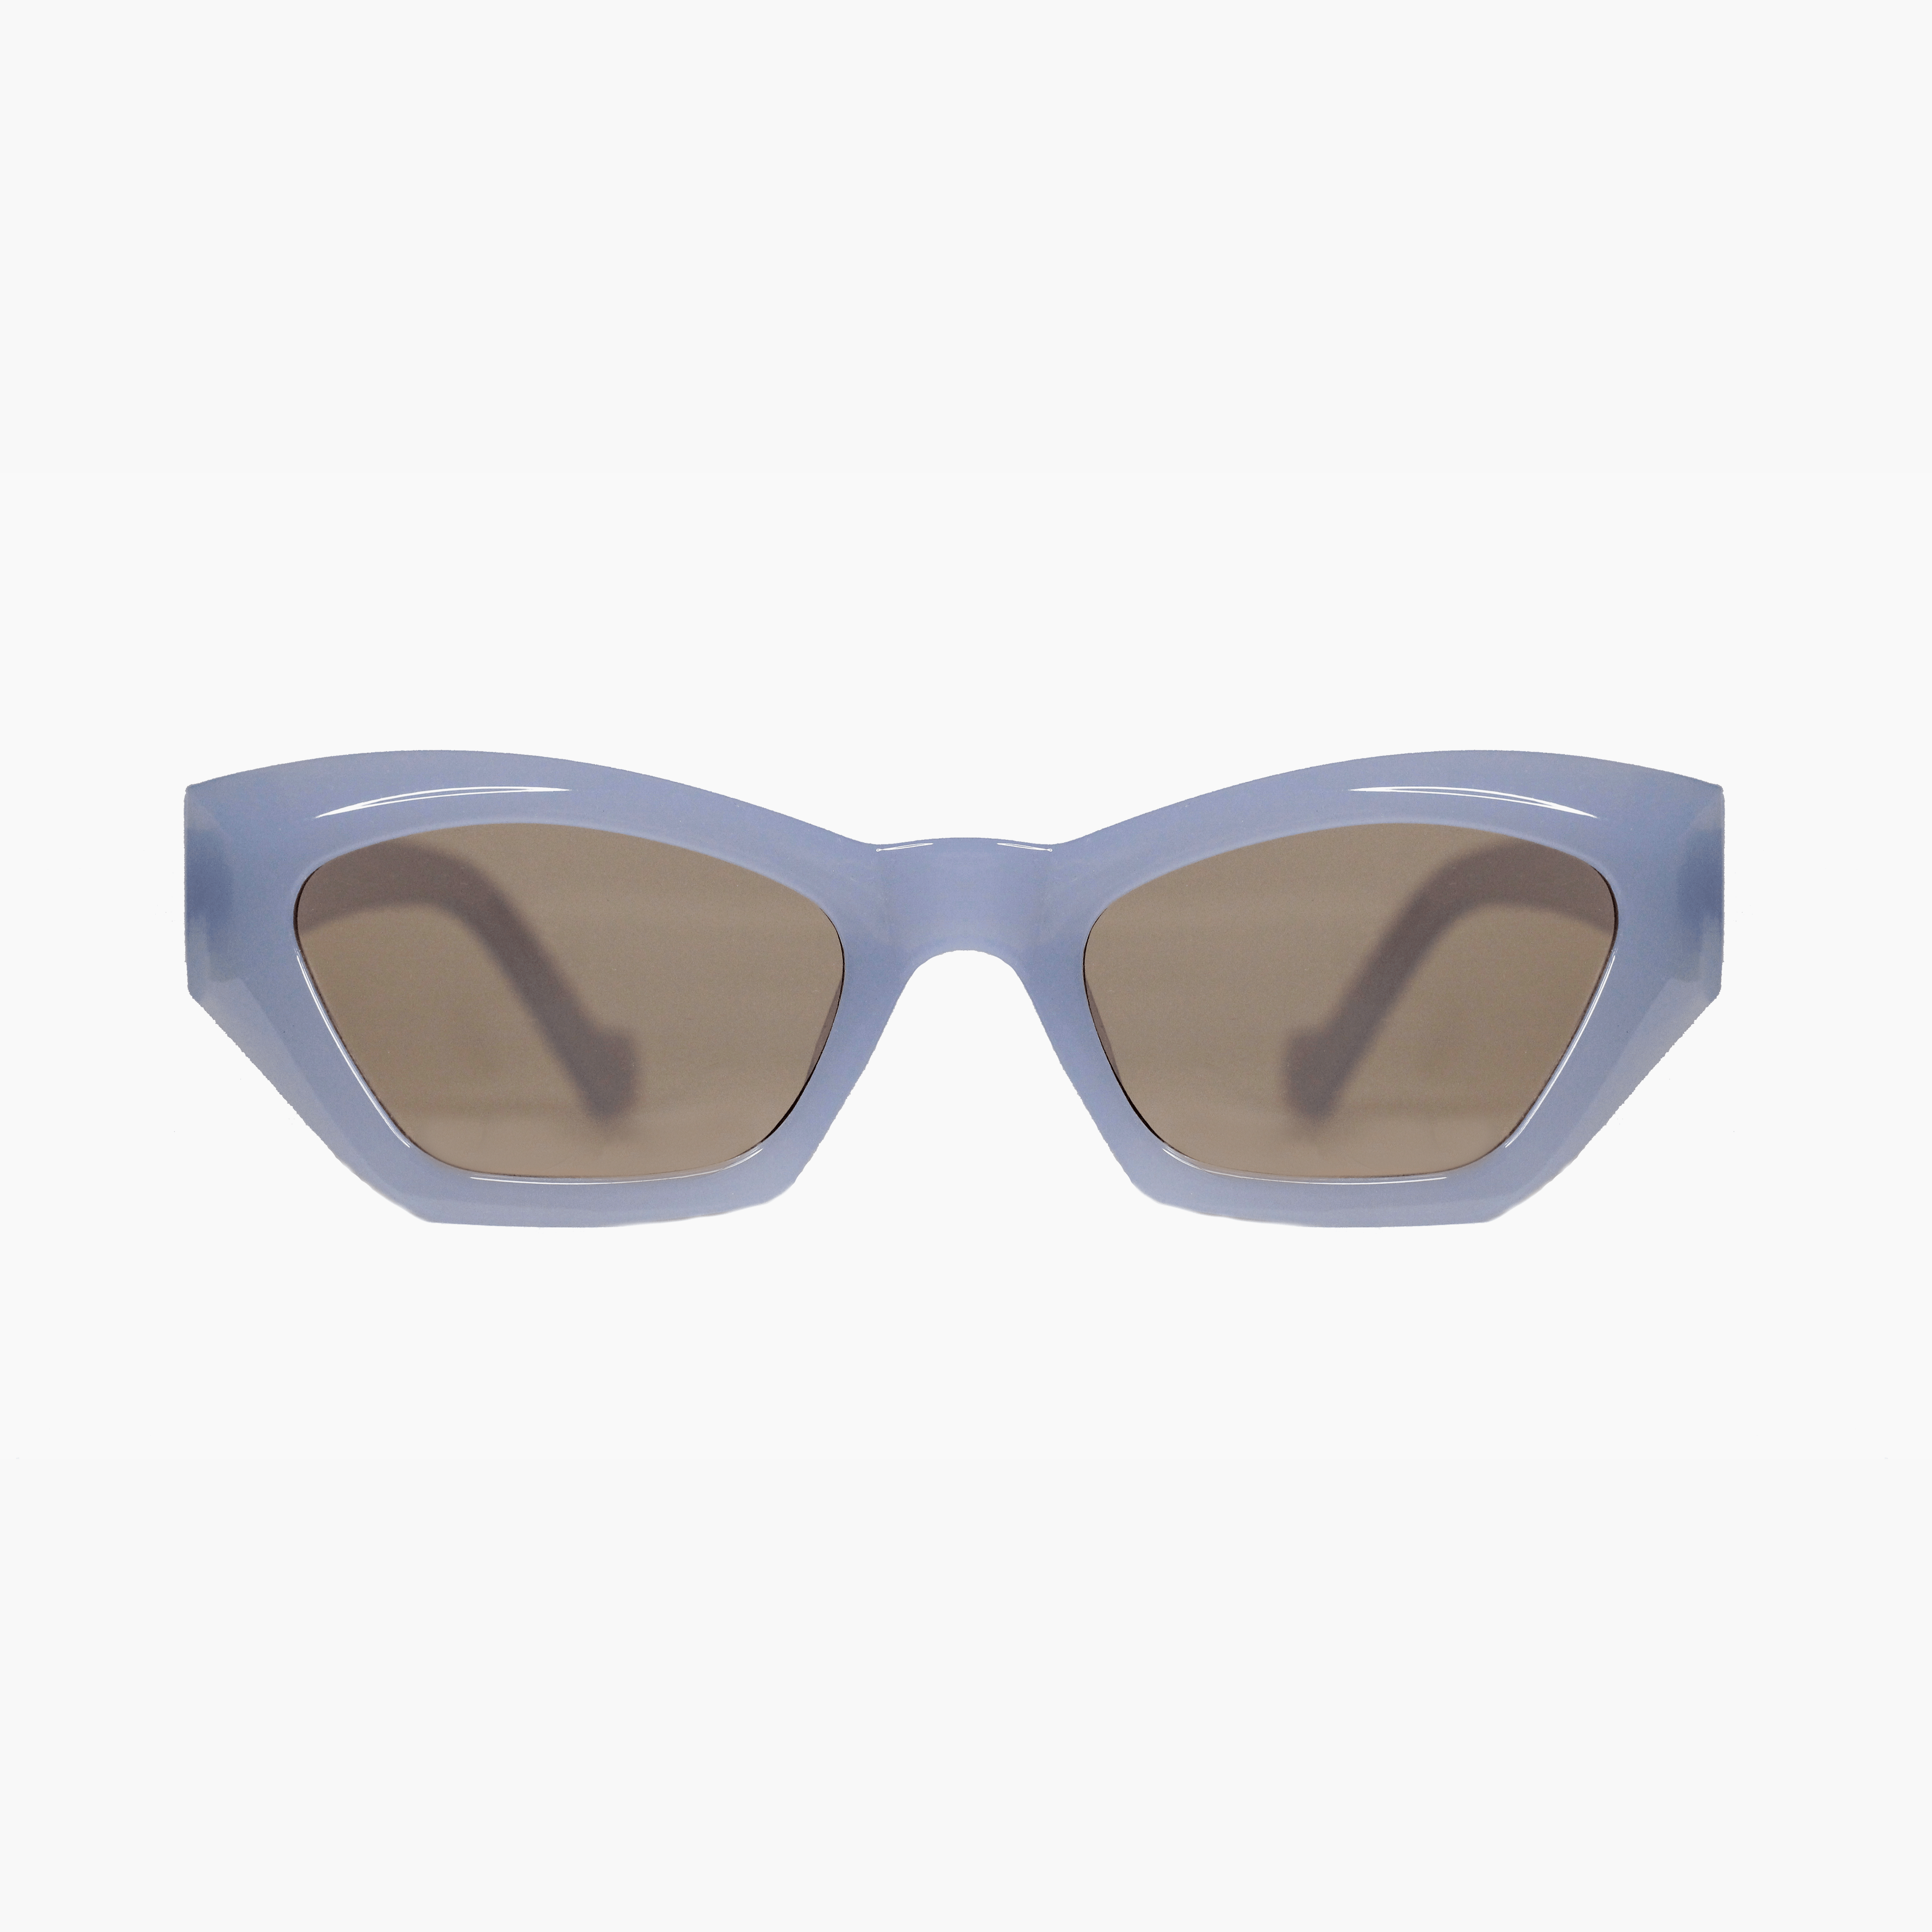 Olivia +UV Shield Sunglasses